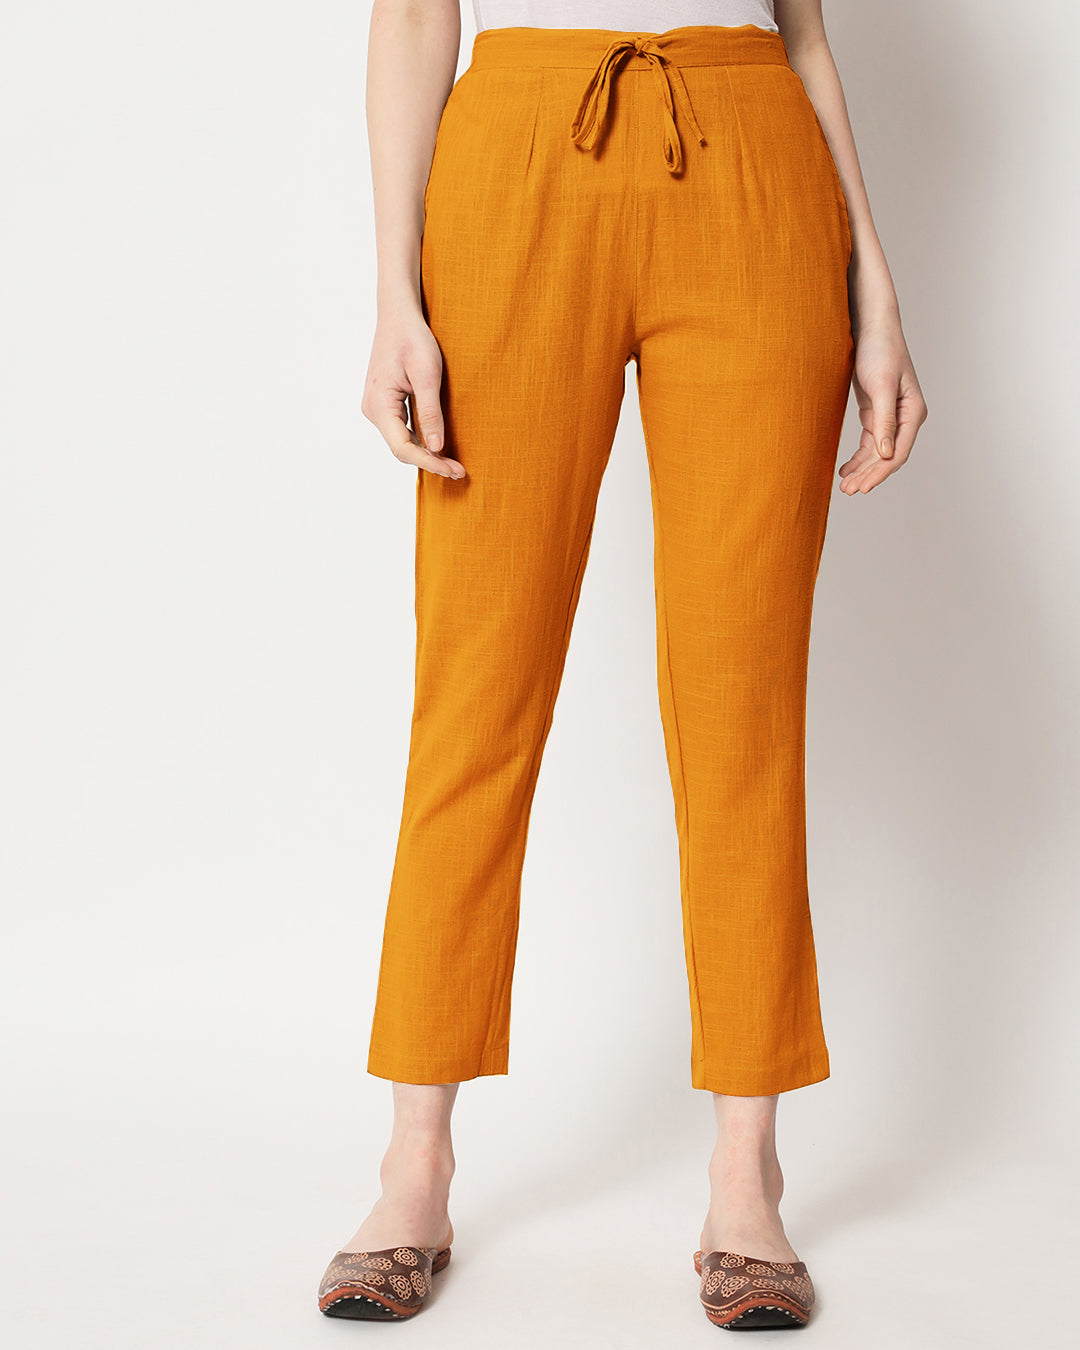 Combo: White & Happy Orange Cigarette Pants- Set of 2